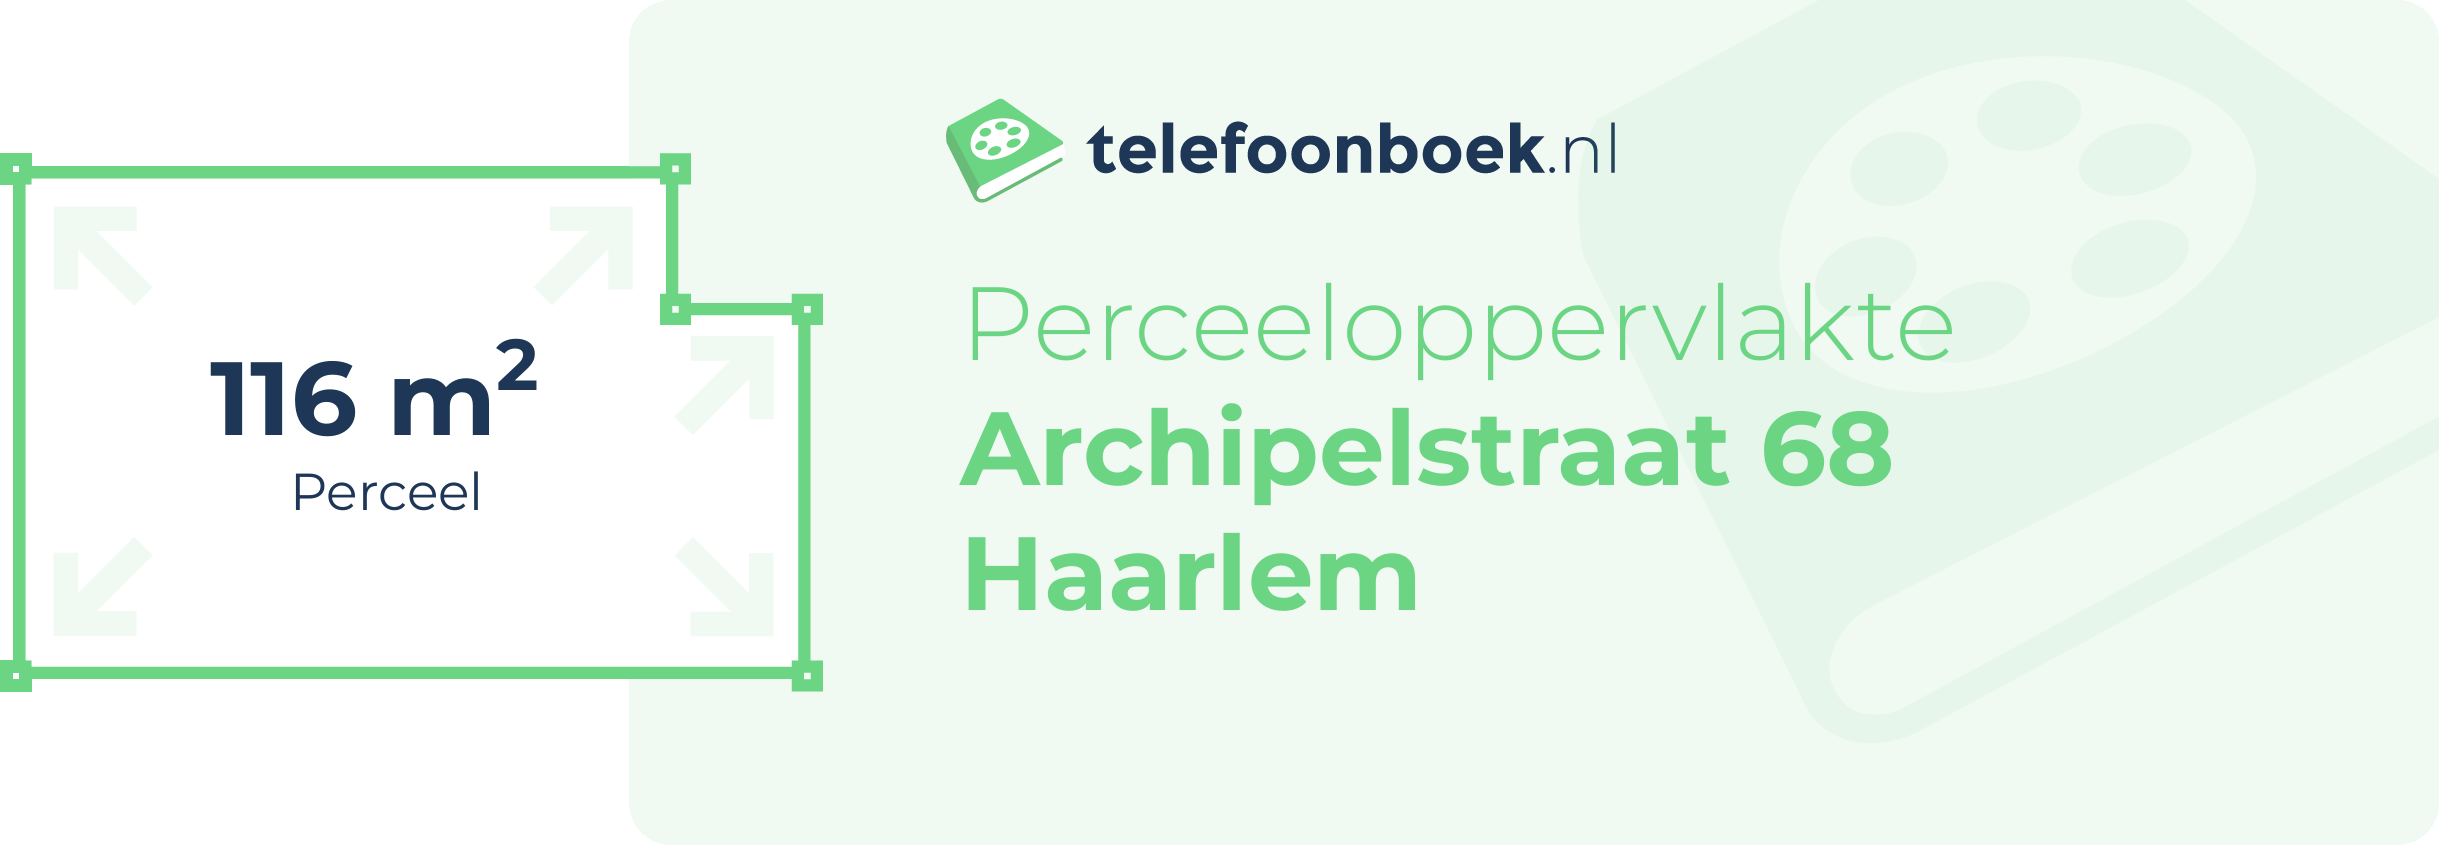 Perceeloppervlakte Archipelstraat 68 Haarlem